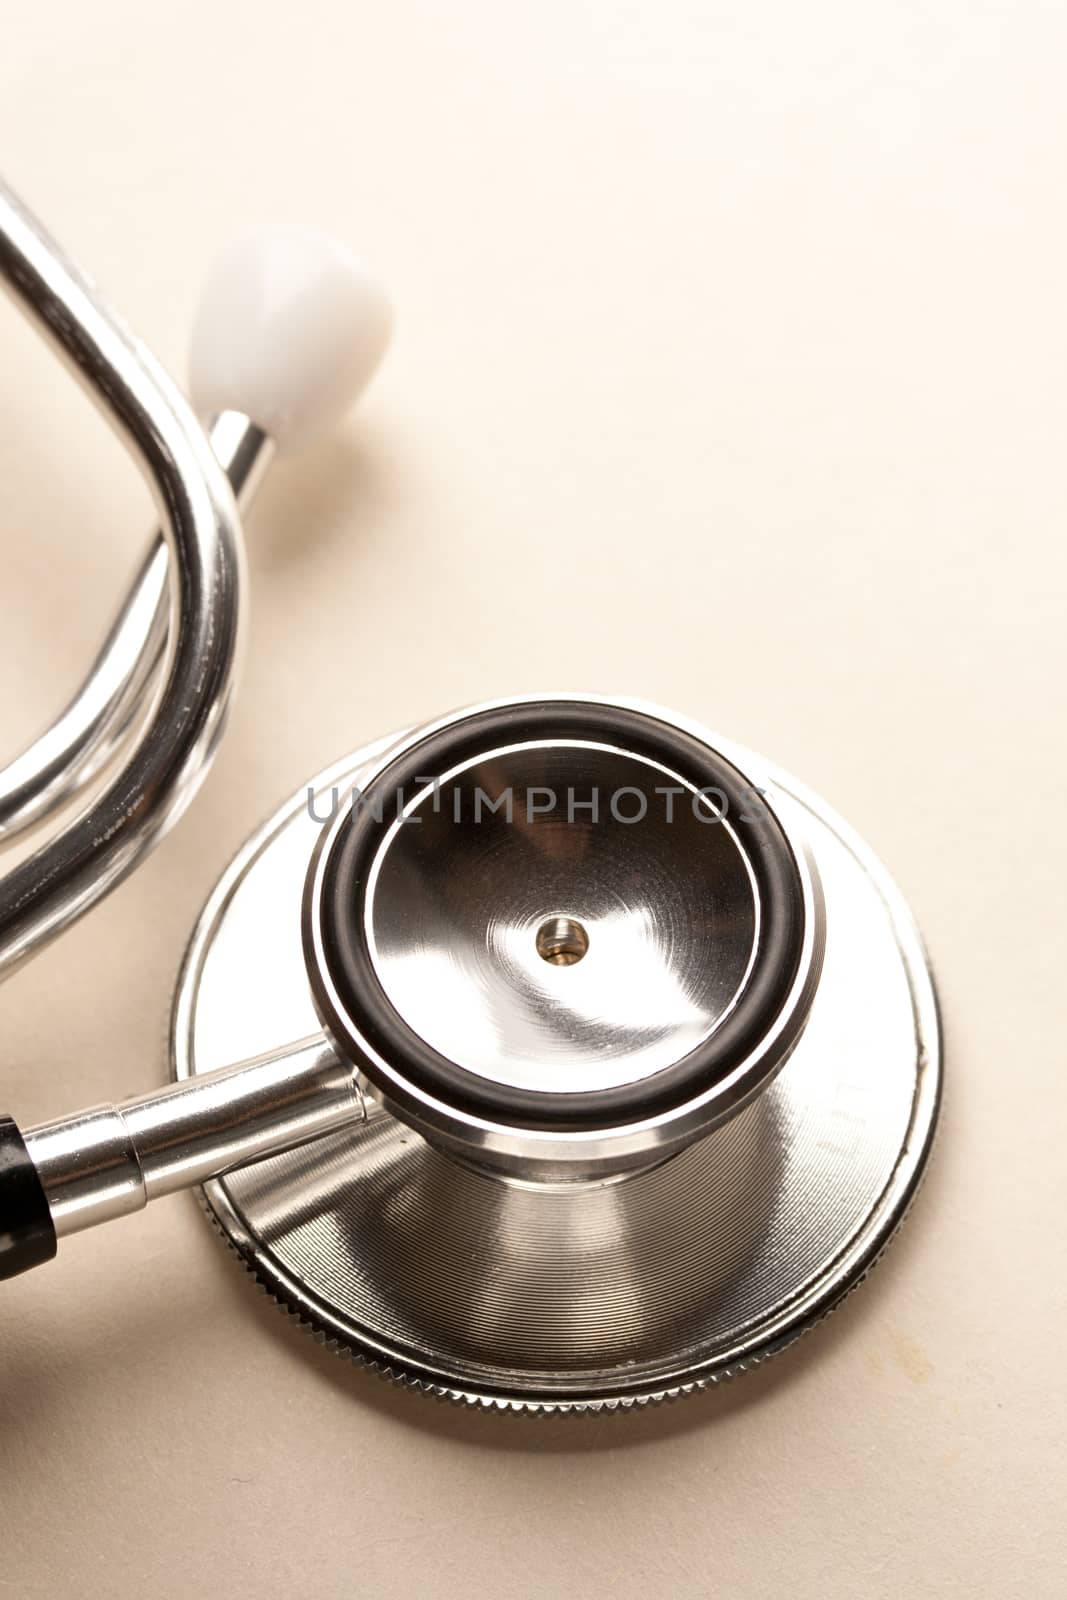 Stethoscope closeup by Garsya